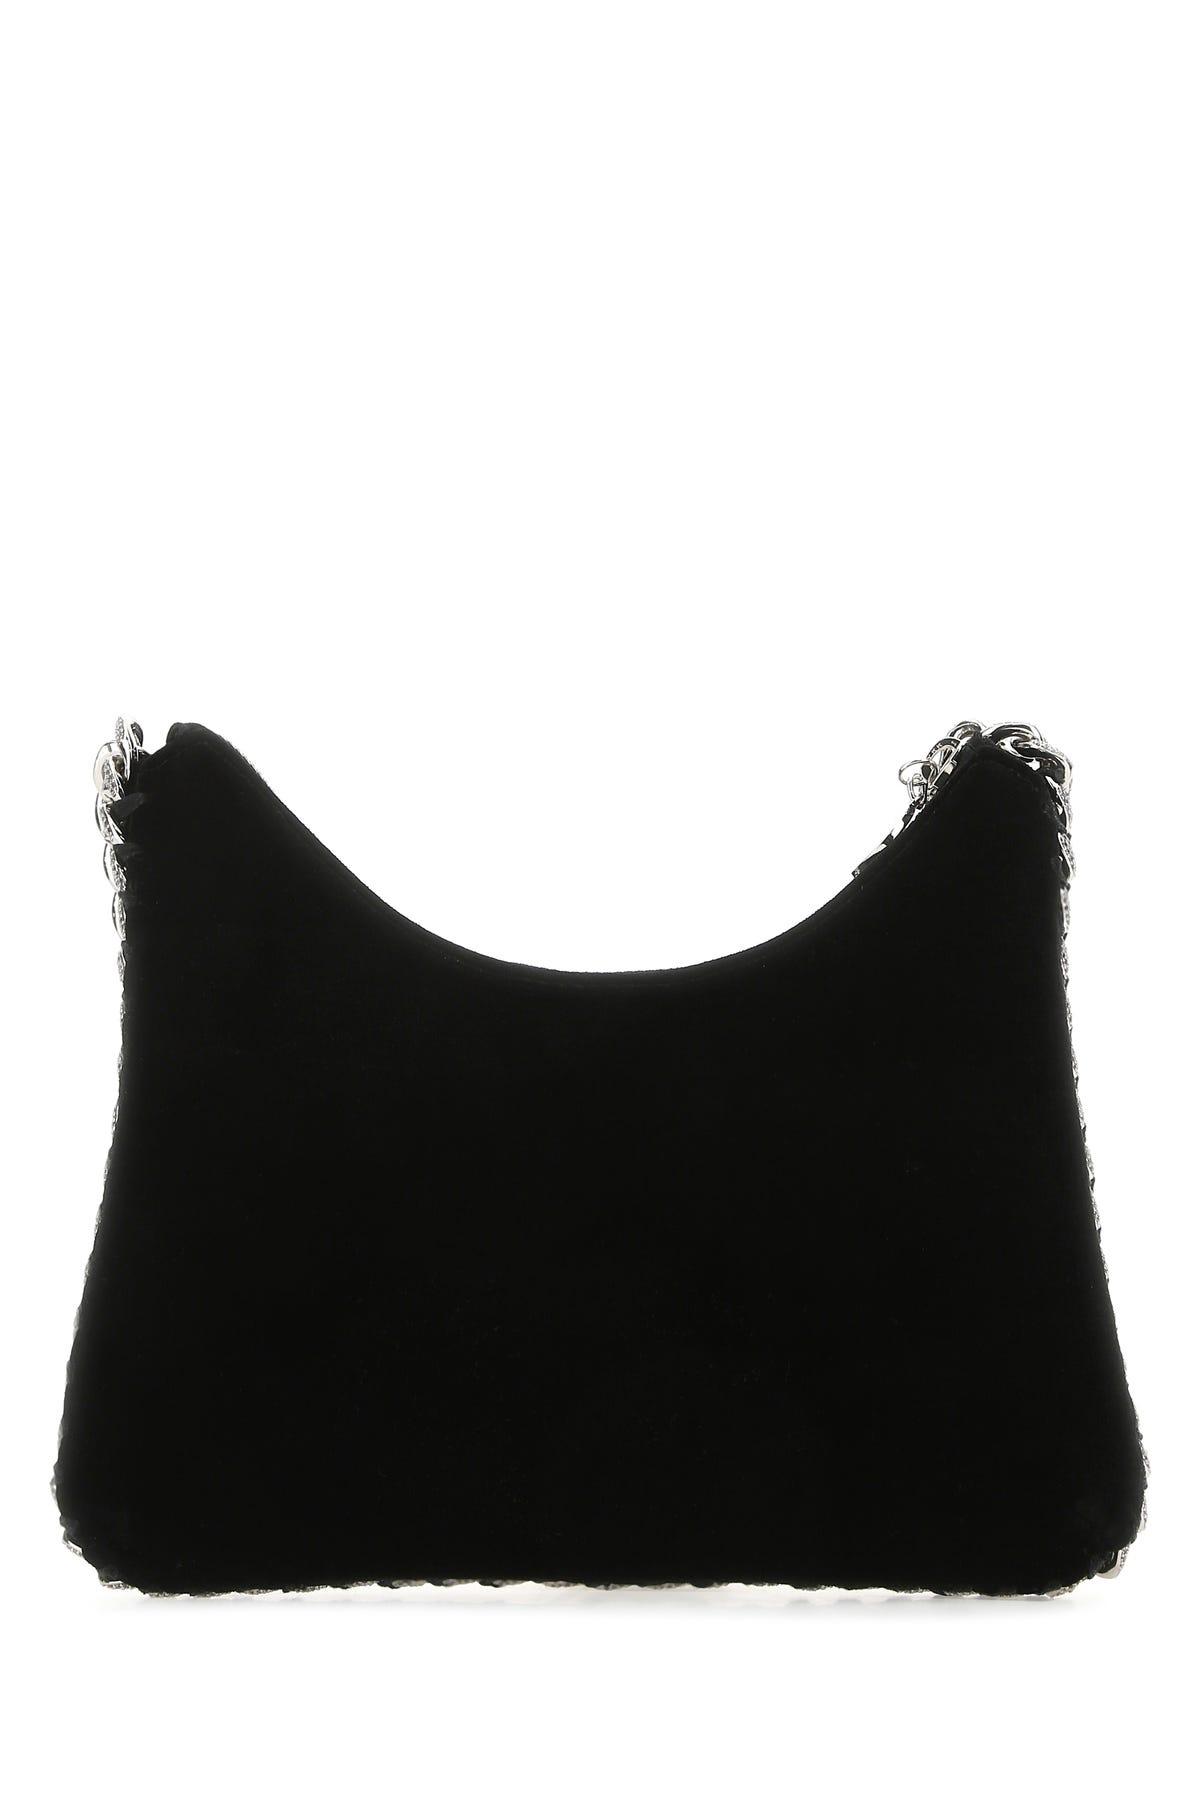 Stella McCartney Velvet Mini Falabella Shoulder Bag in Black | Lyst